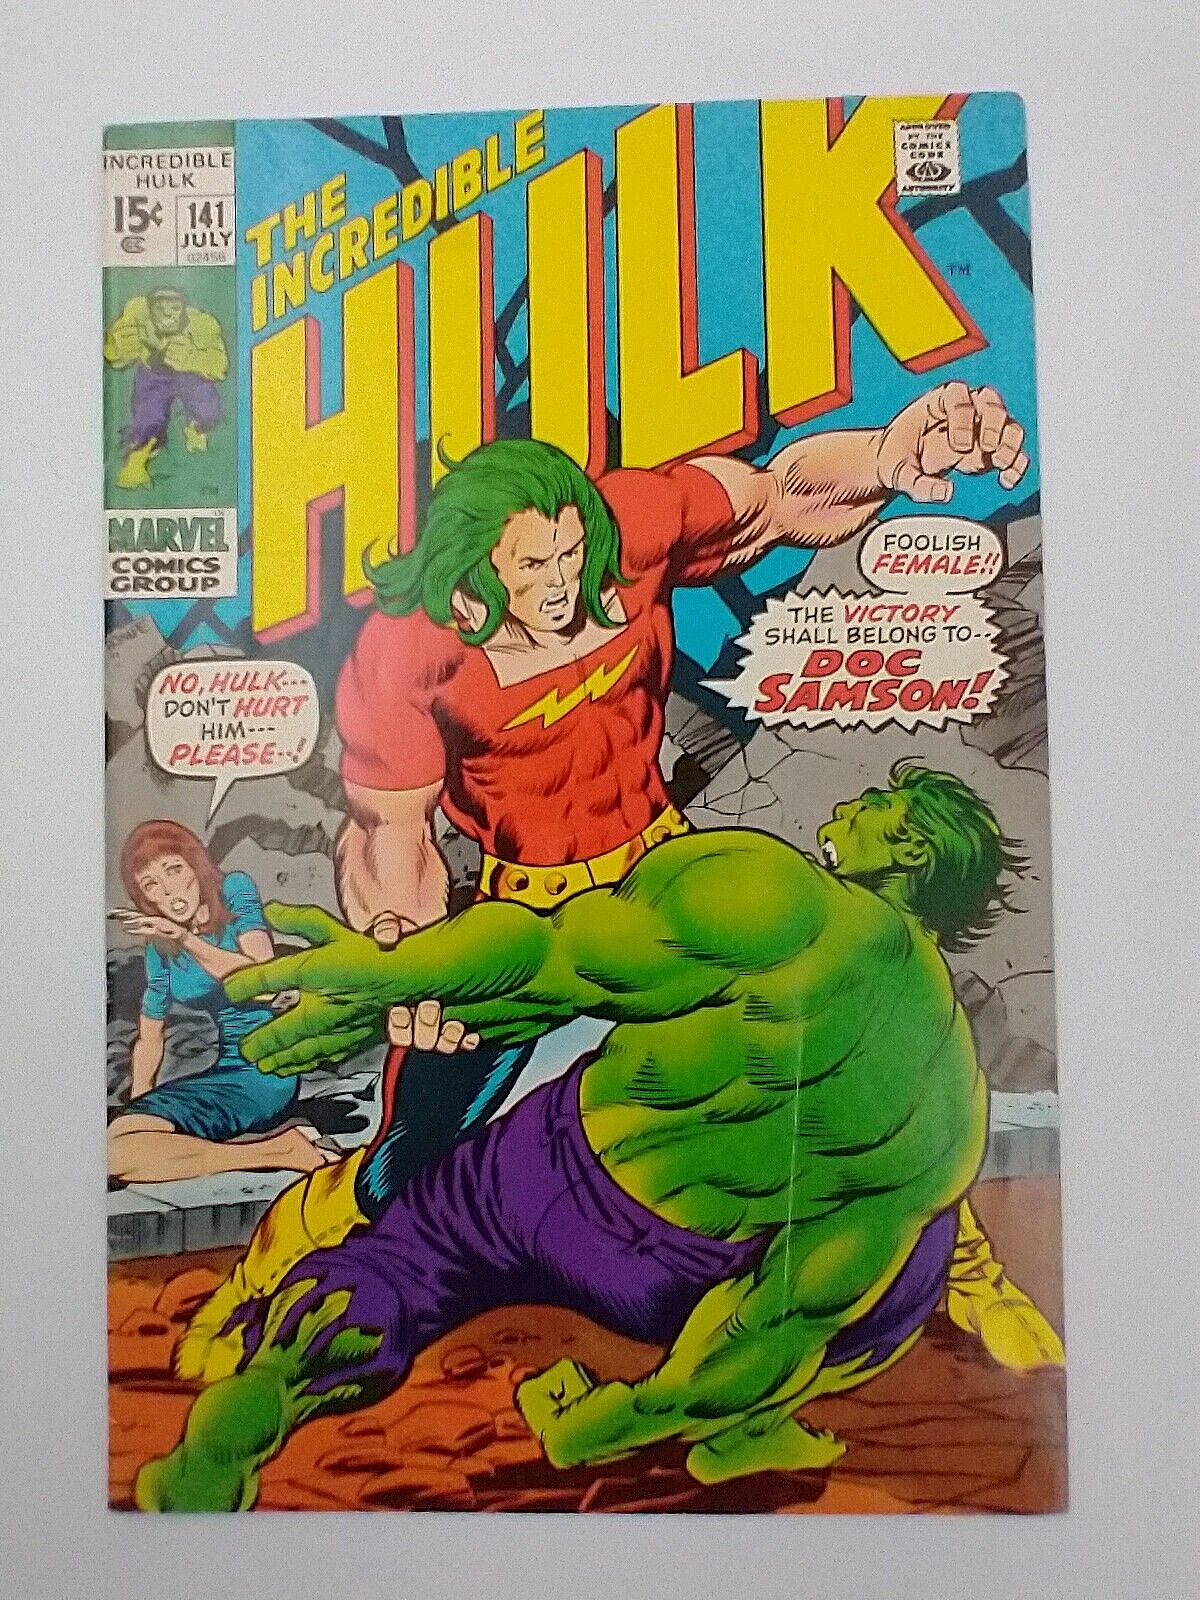 Marvel. Incredible Hulk #141. First Appearance, Cover,  & Origin of Doc Samson.